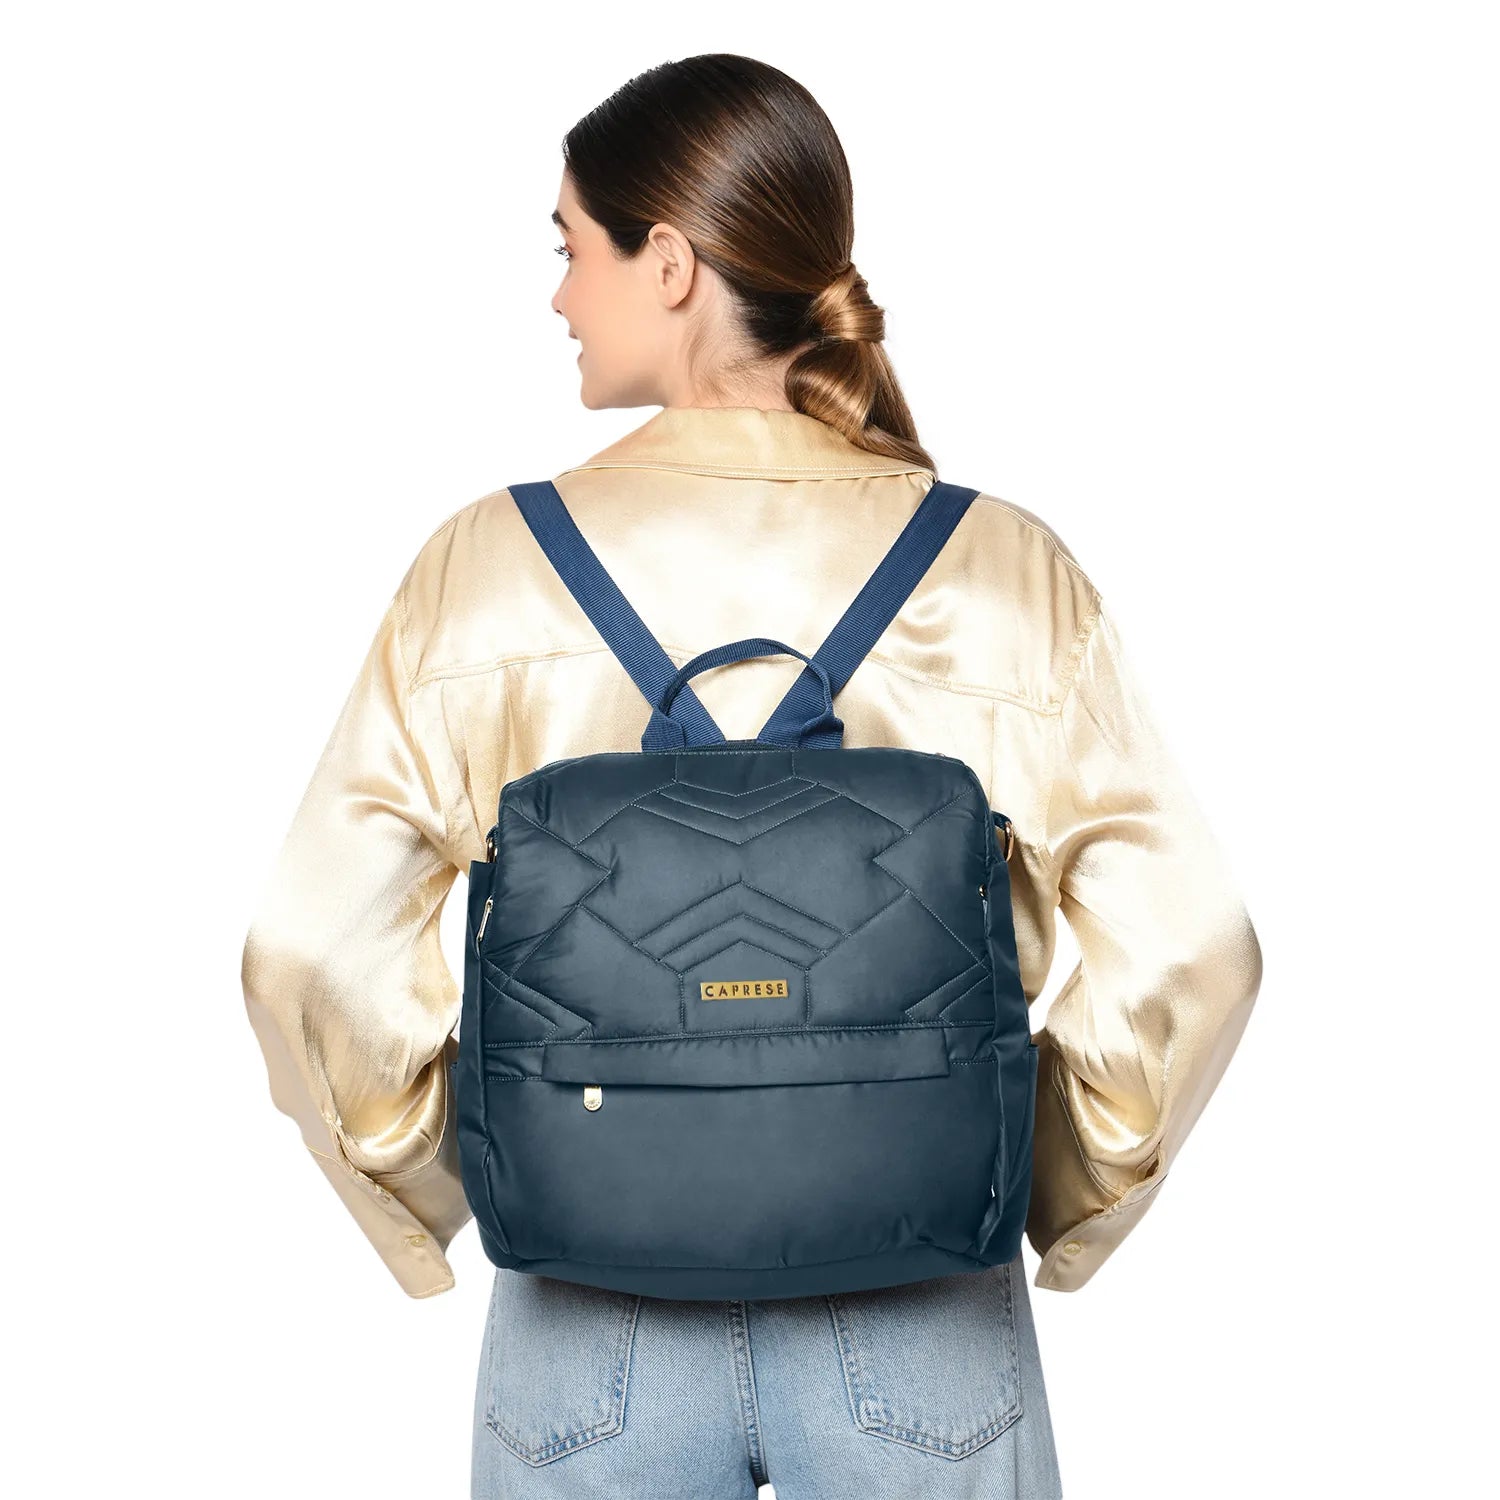 Caprese Clara backpack large